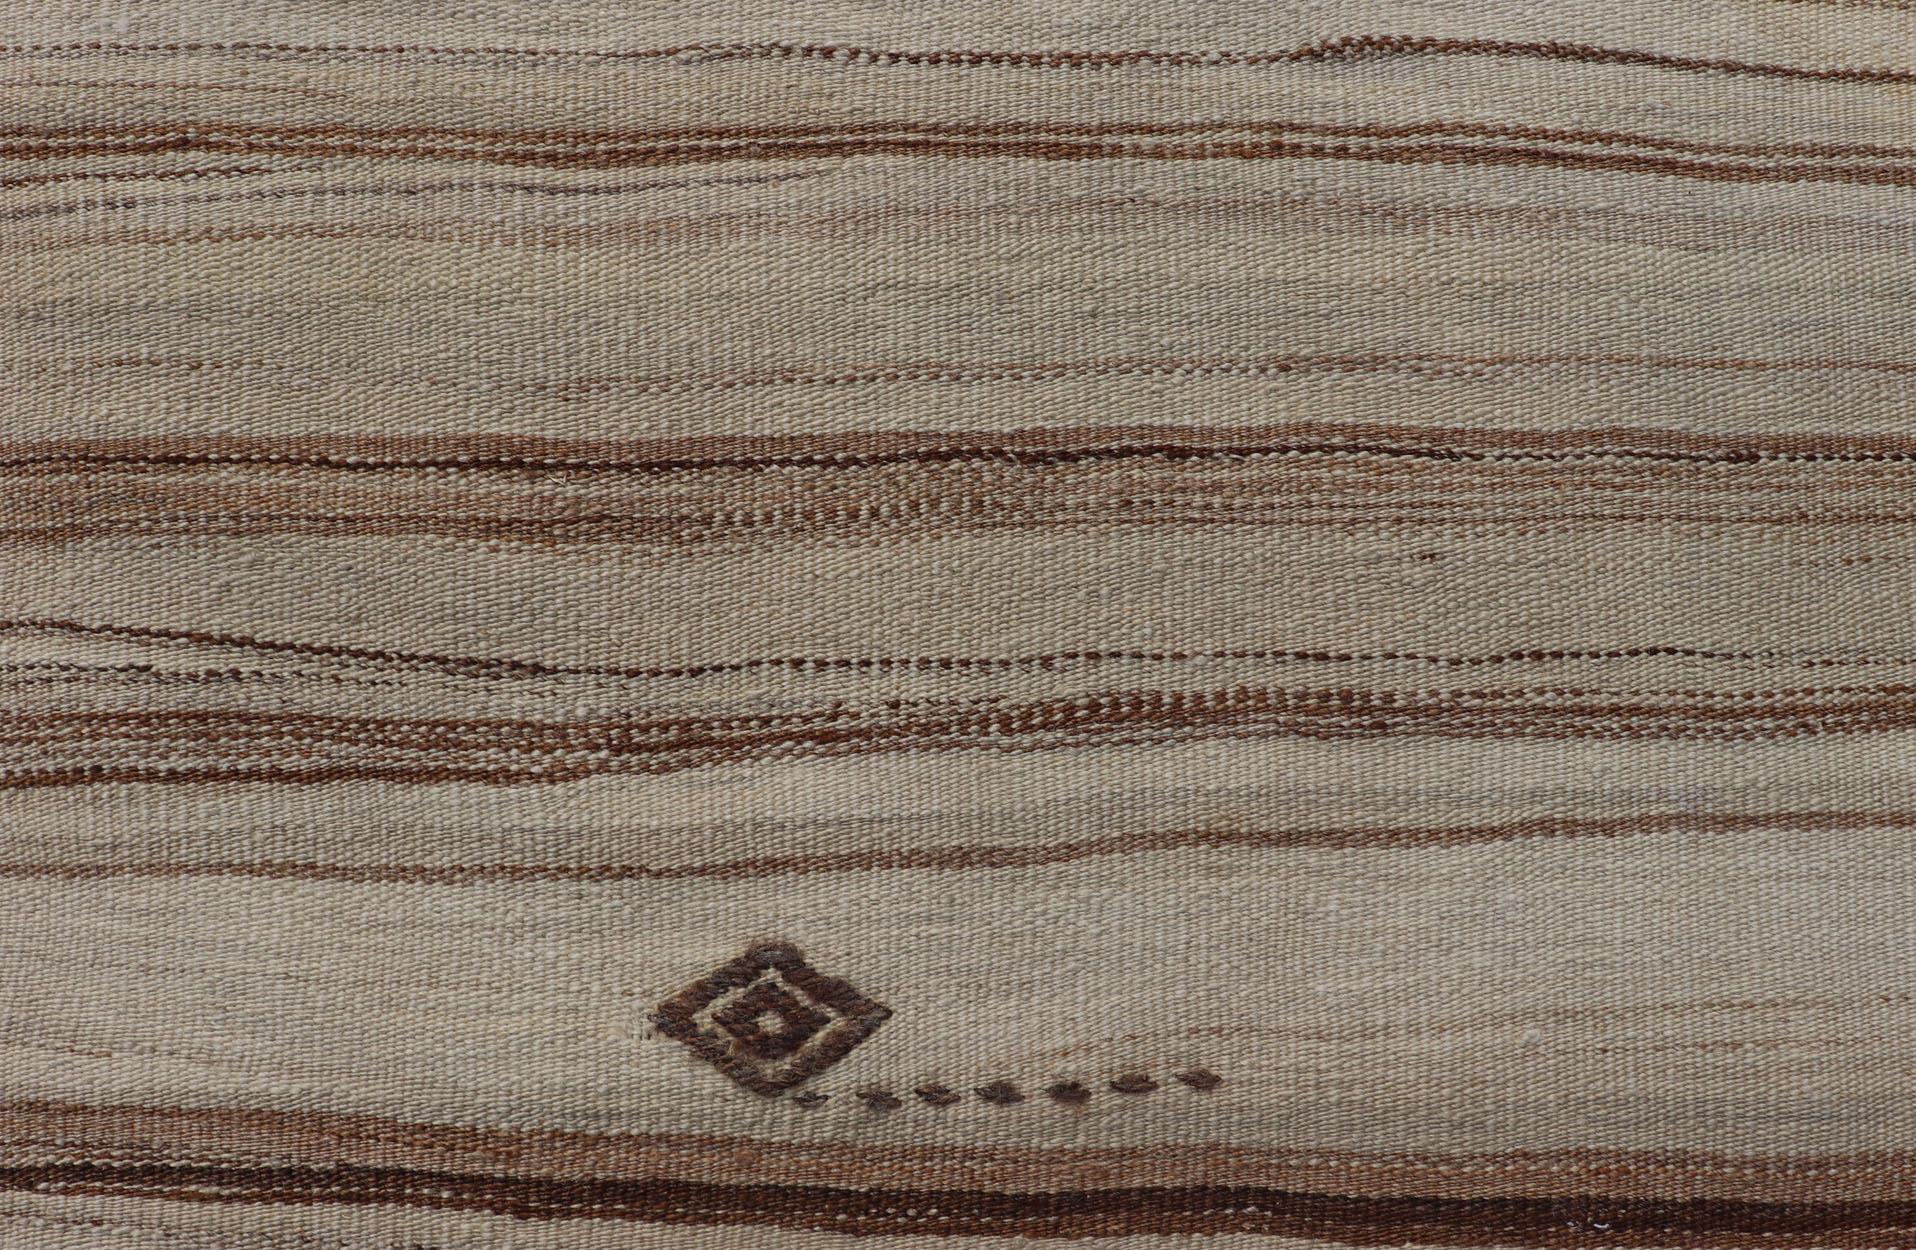 Vintage Flat Weave Turkish Kilim with Stripes in Tan, Taupe, Cream, and Brown.  Vintage Turkish Kilim, Keivan Woven Arts / rug EN-P13141, country of origin / type: Turkey / Kilim, circa Mid-20th Century.

This vintage flat-woven Kilim features a